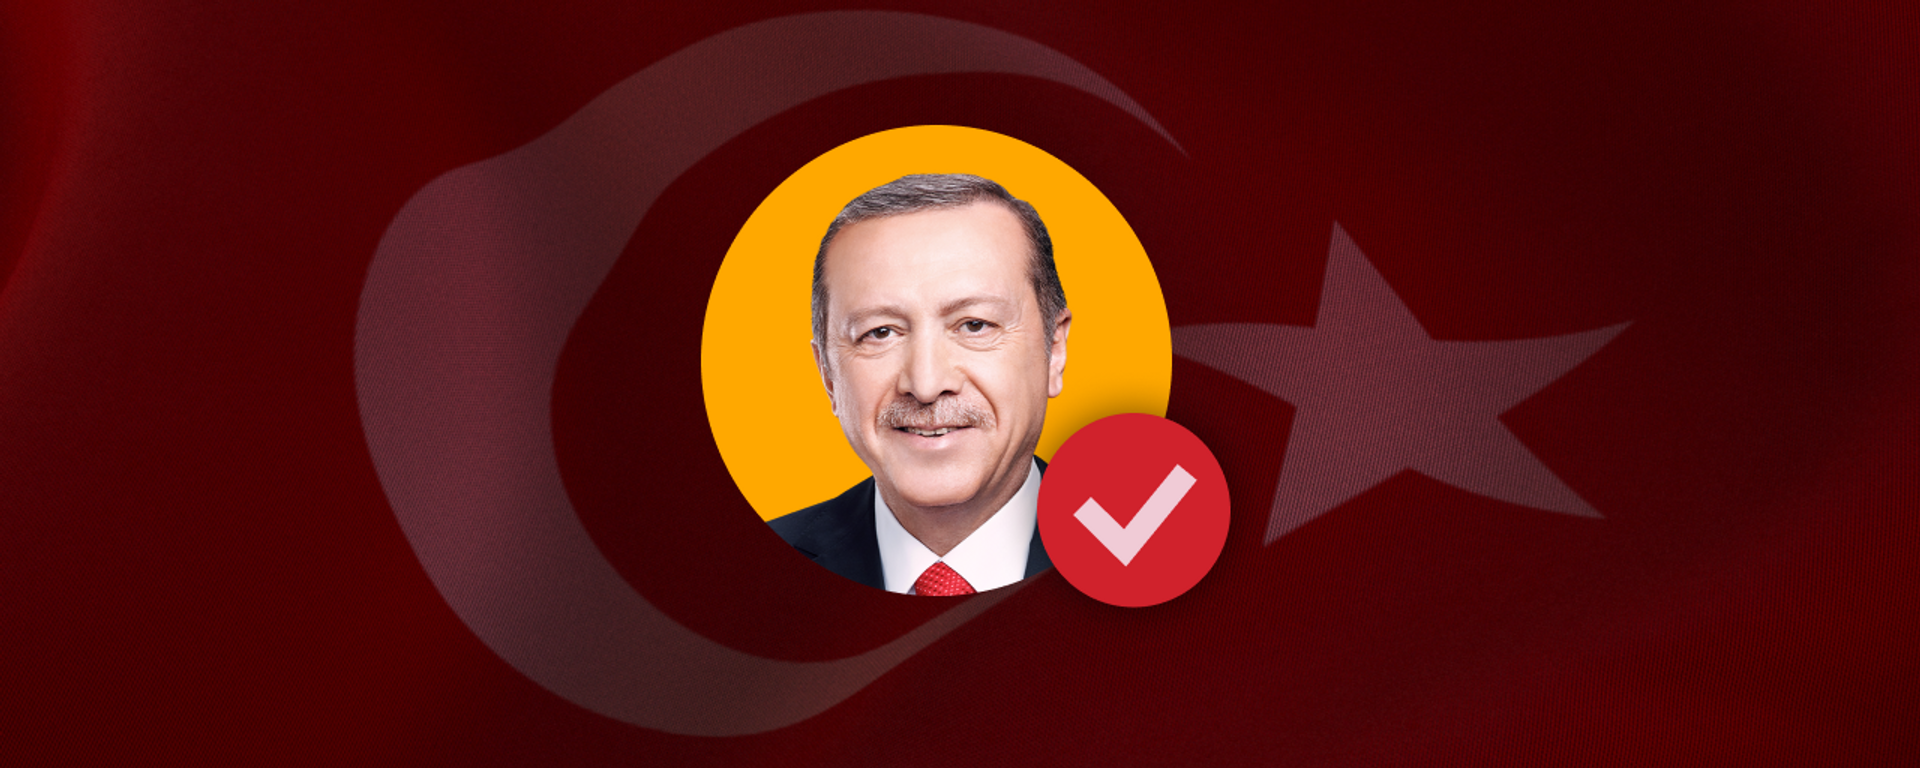 Erdogan wins cover - Sputnik International, 1920, 29.05.2023